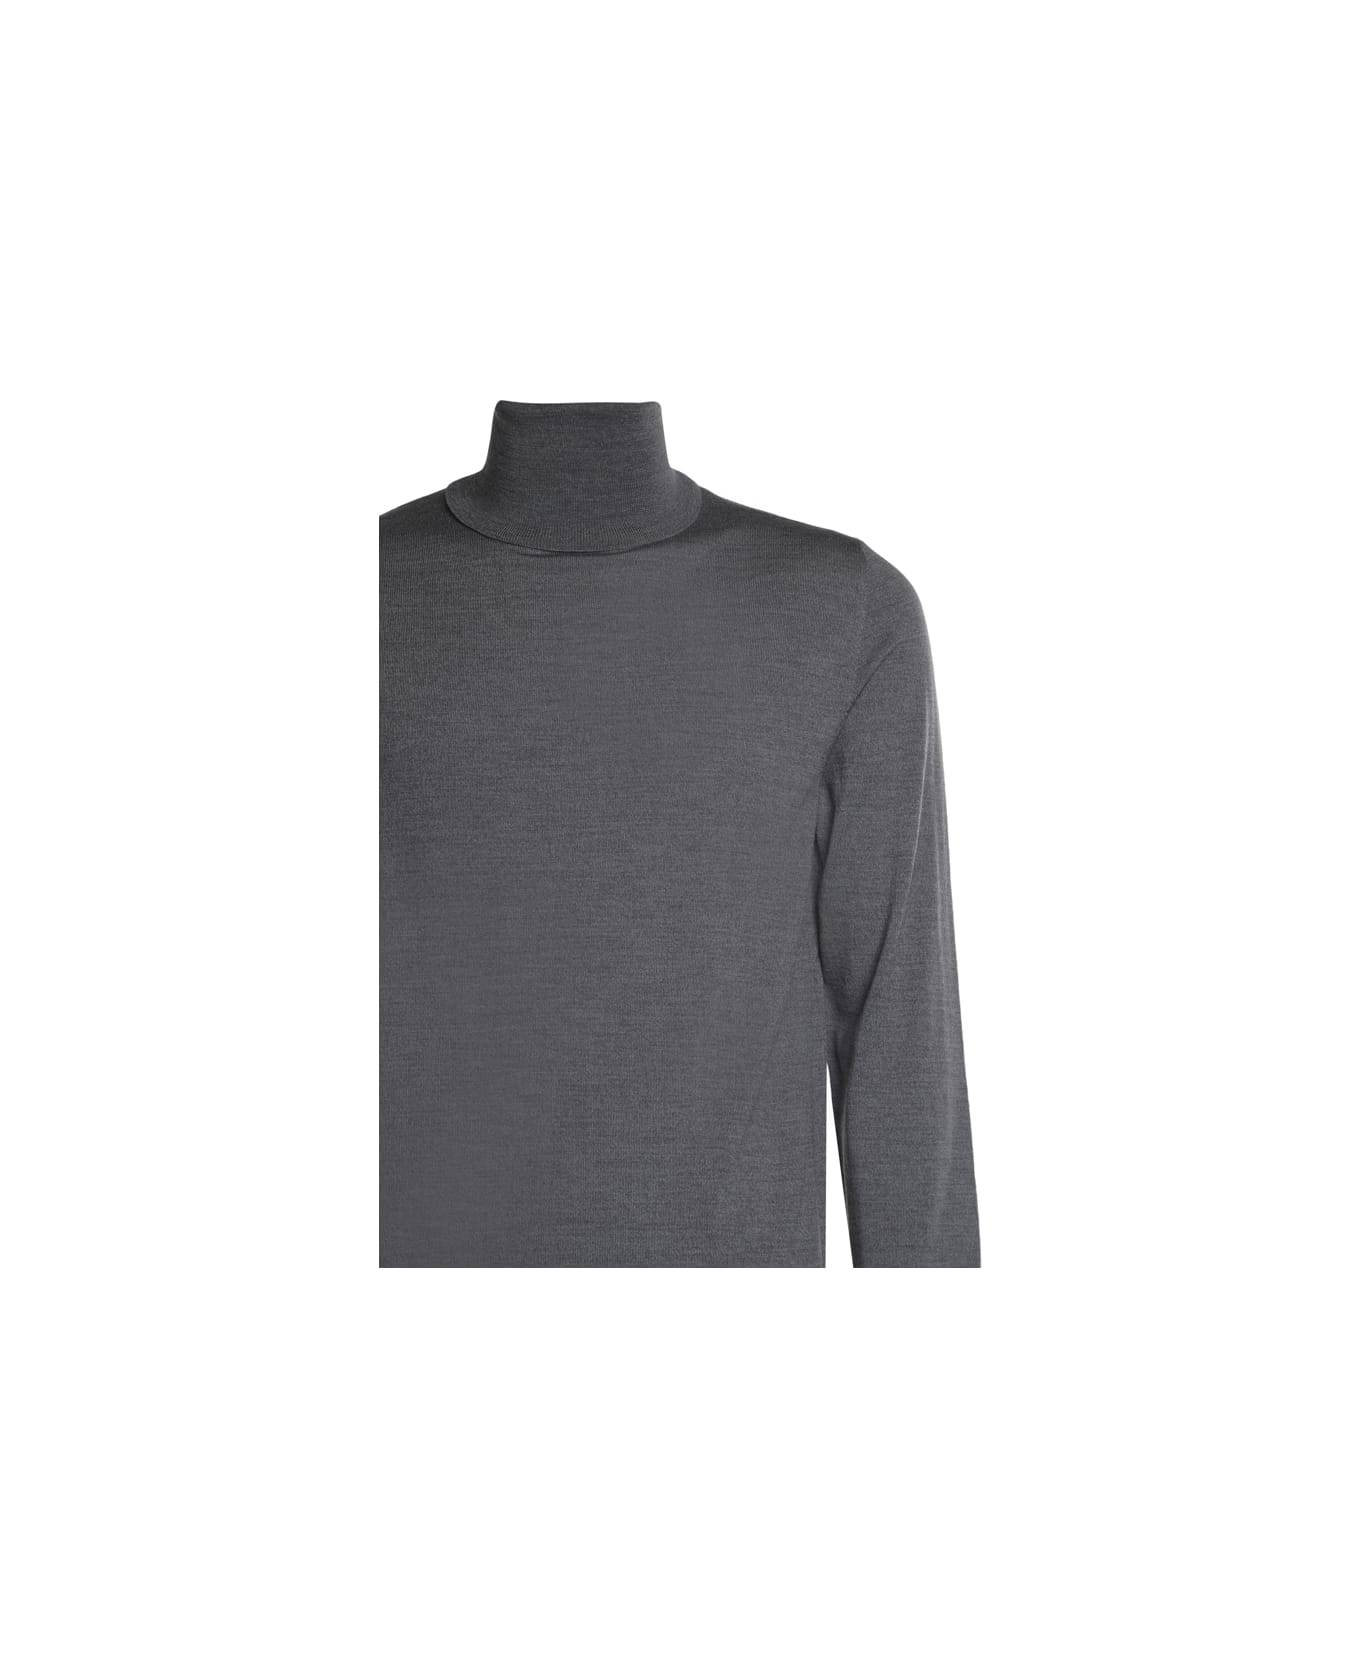 Zanone Turtleneck Sweater - Grey